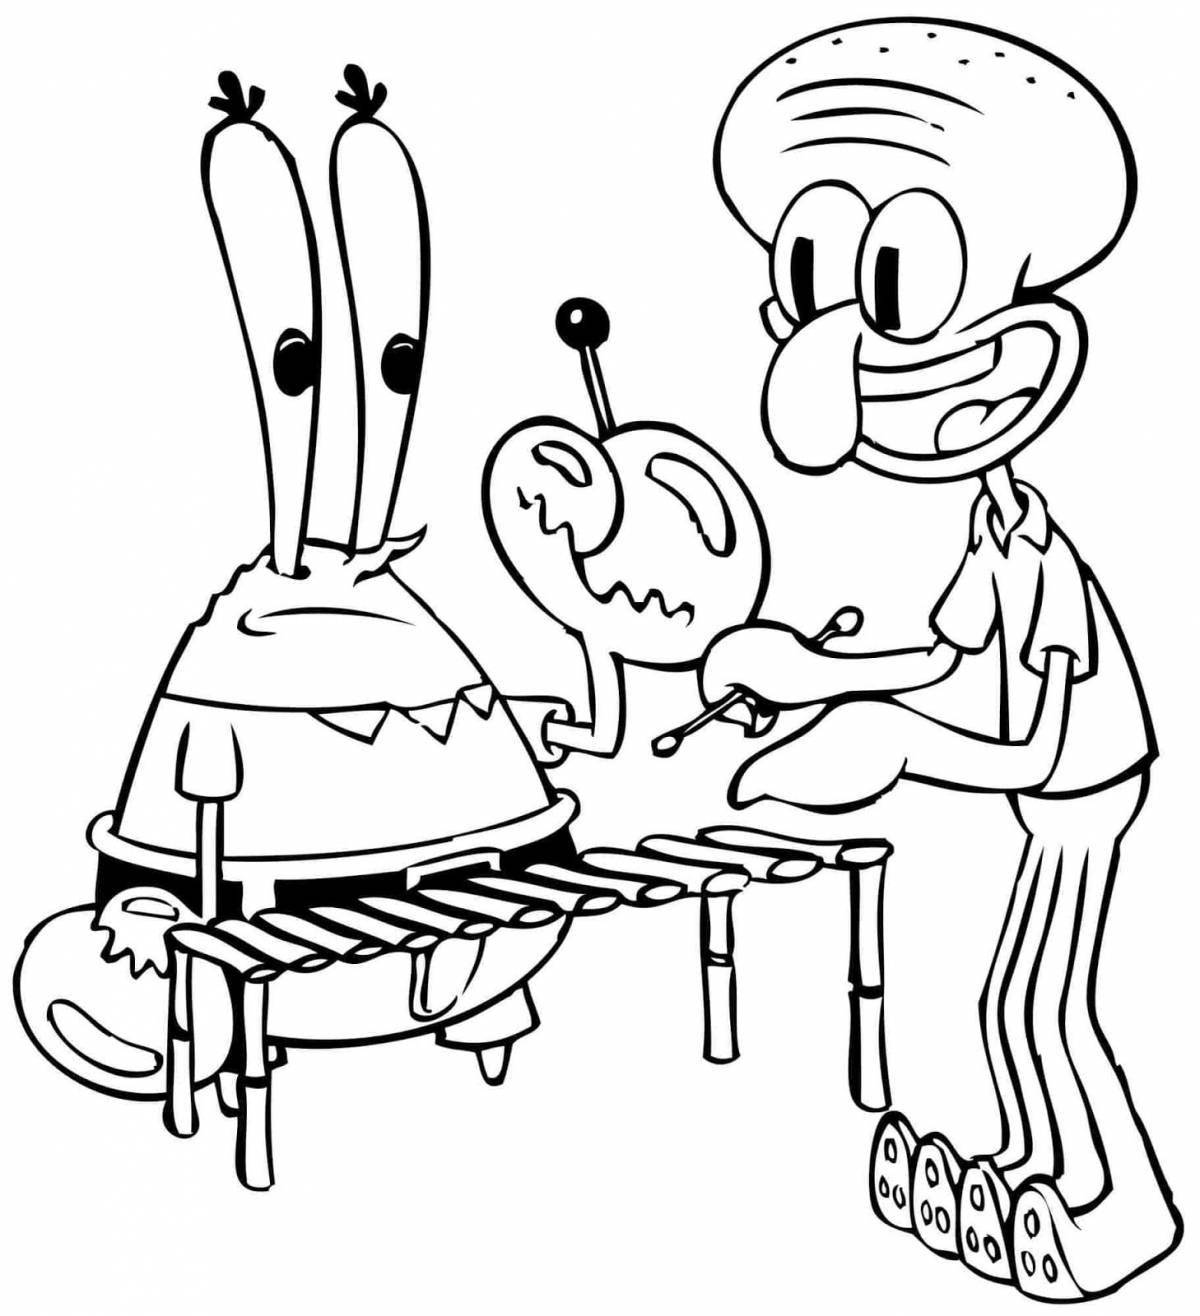 Sparkling mr krabs coloring page